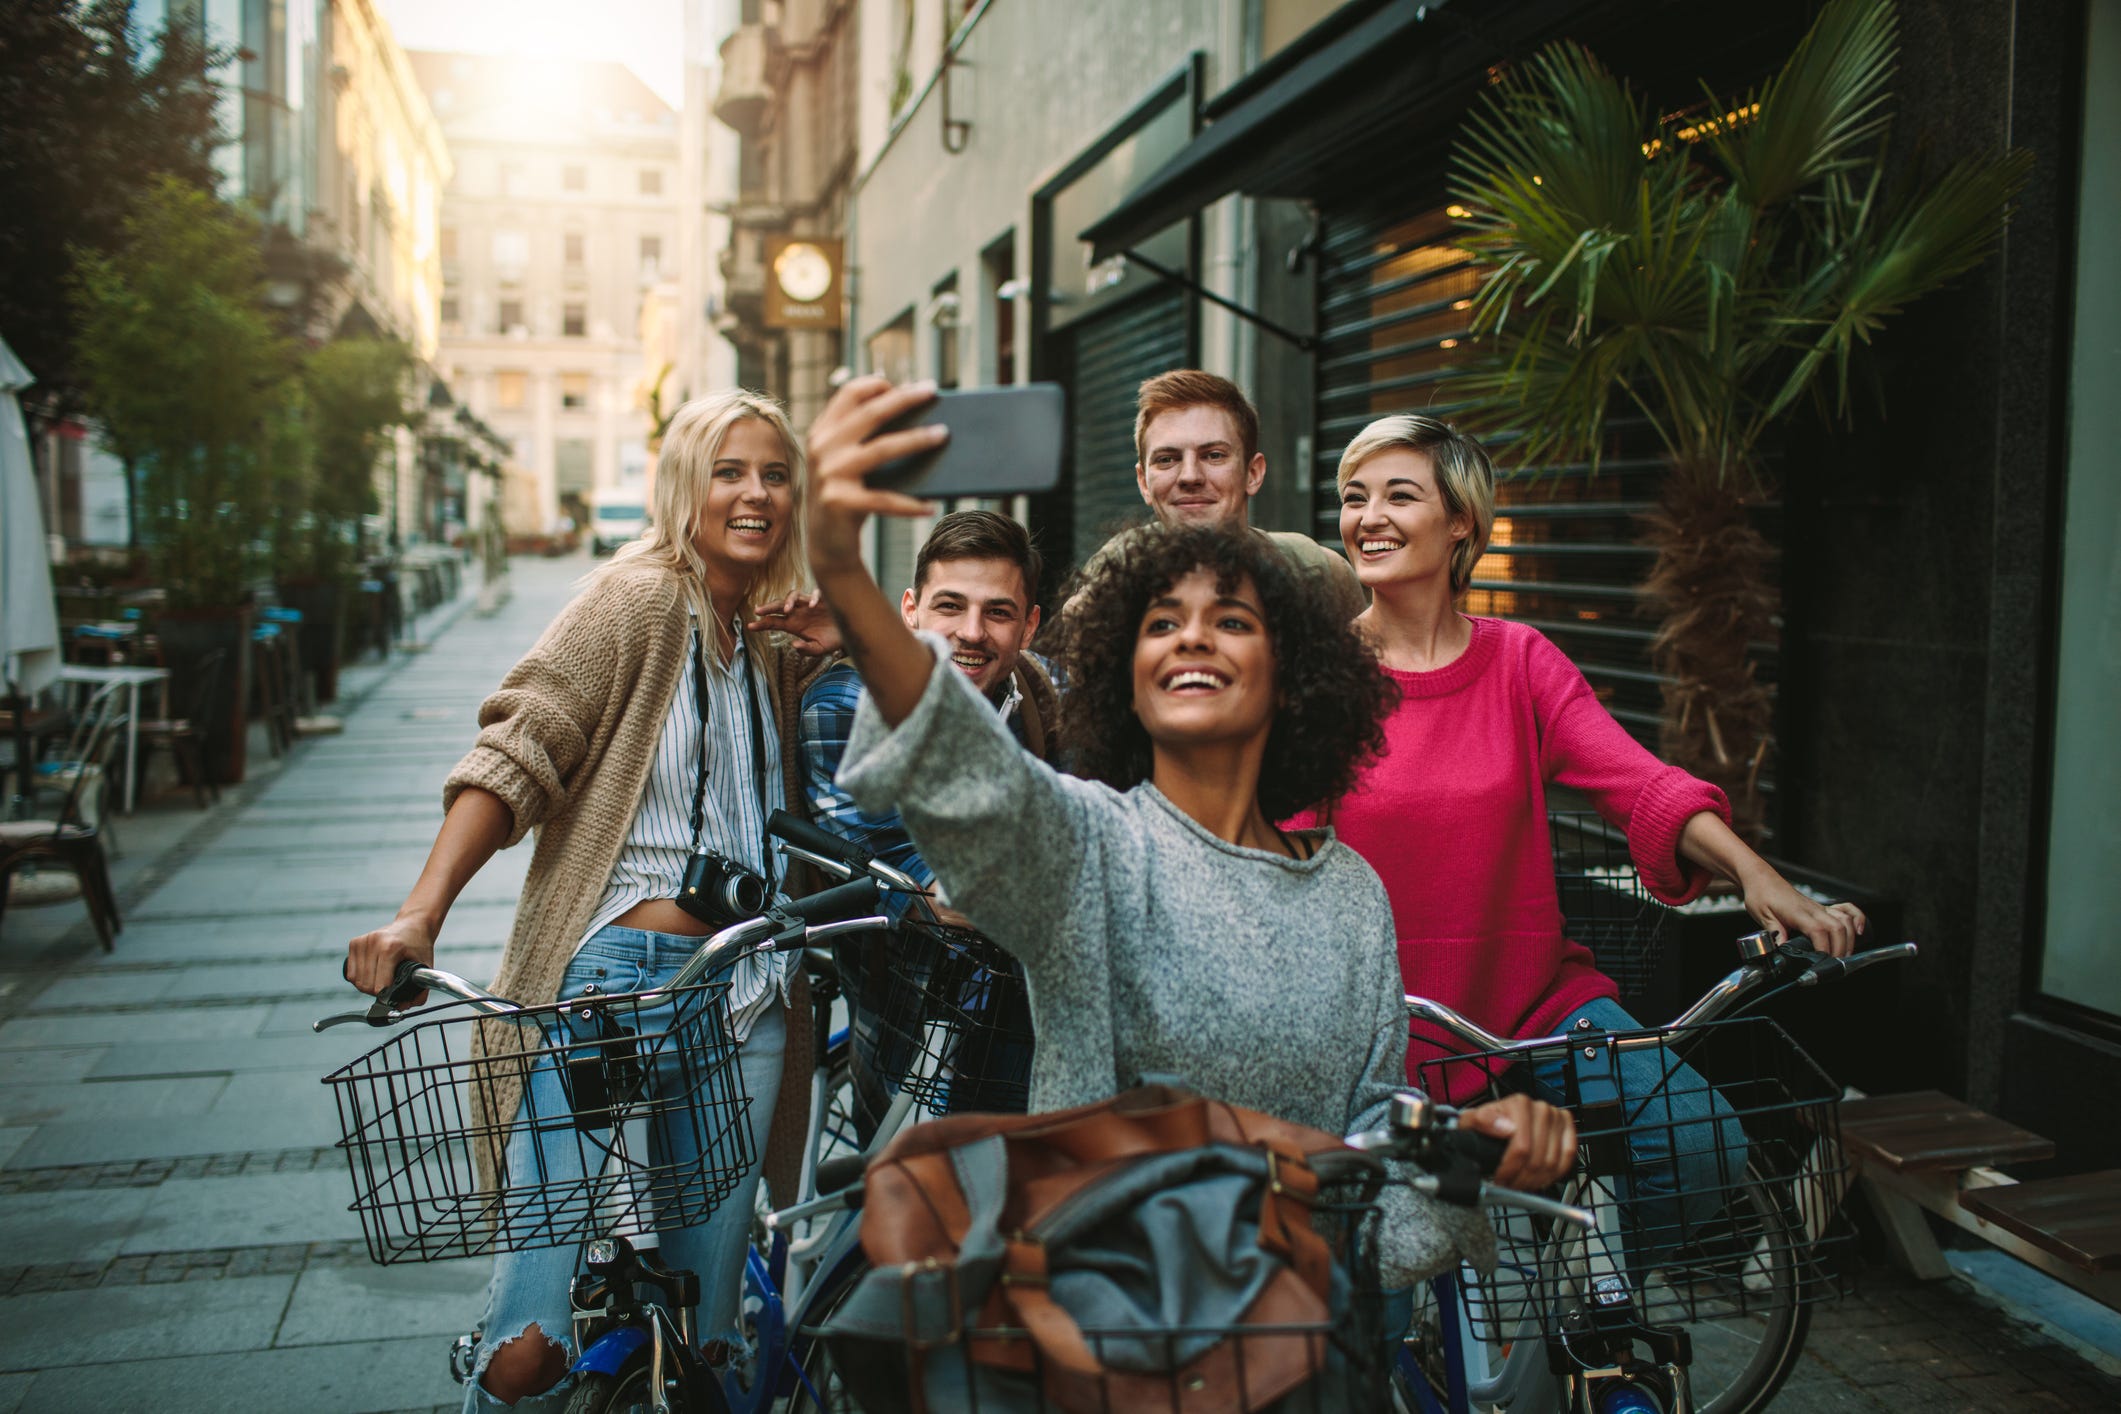 most bike friendly cities